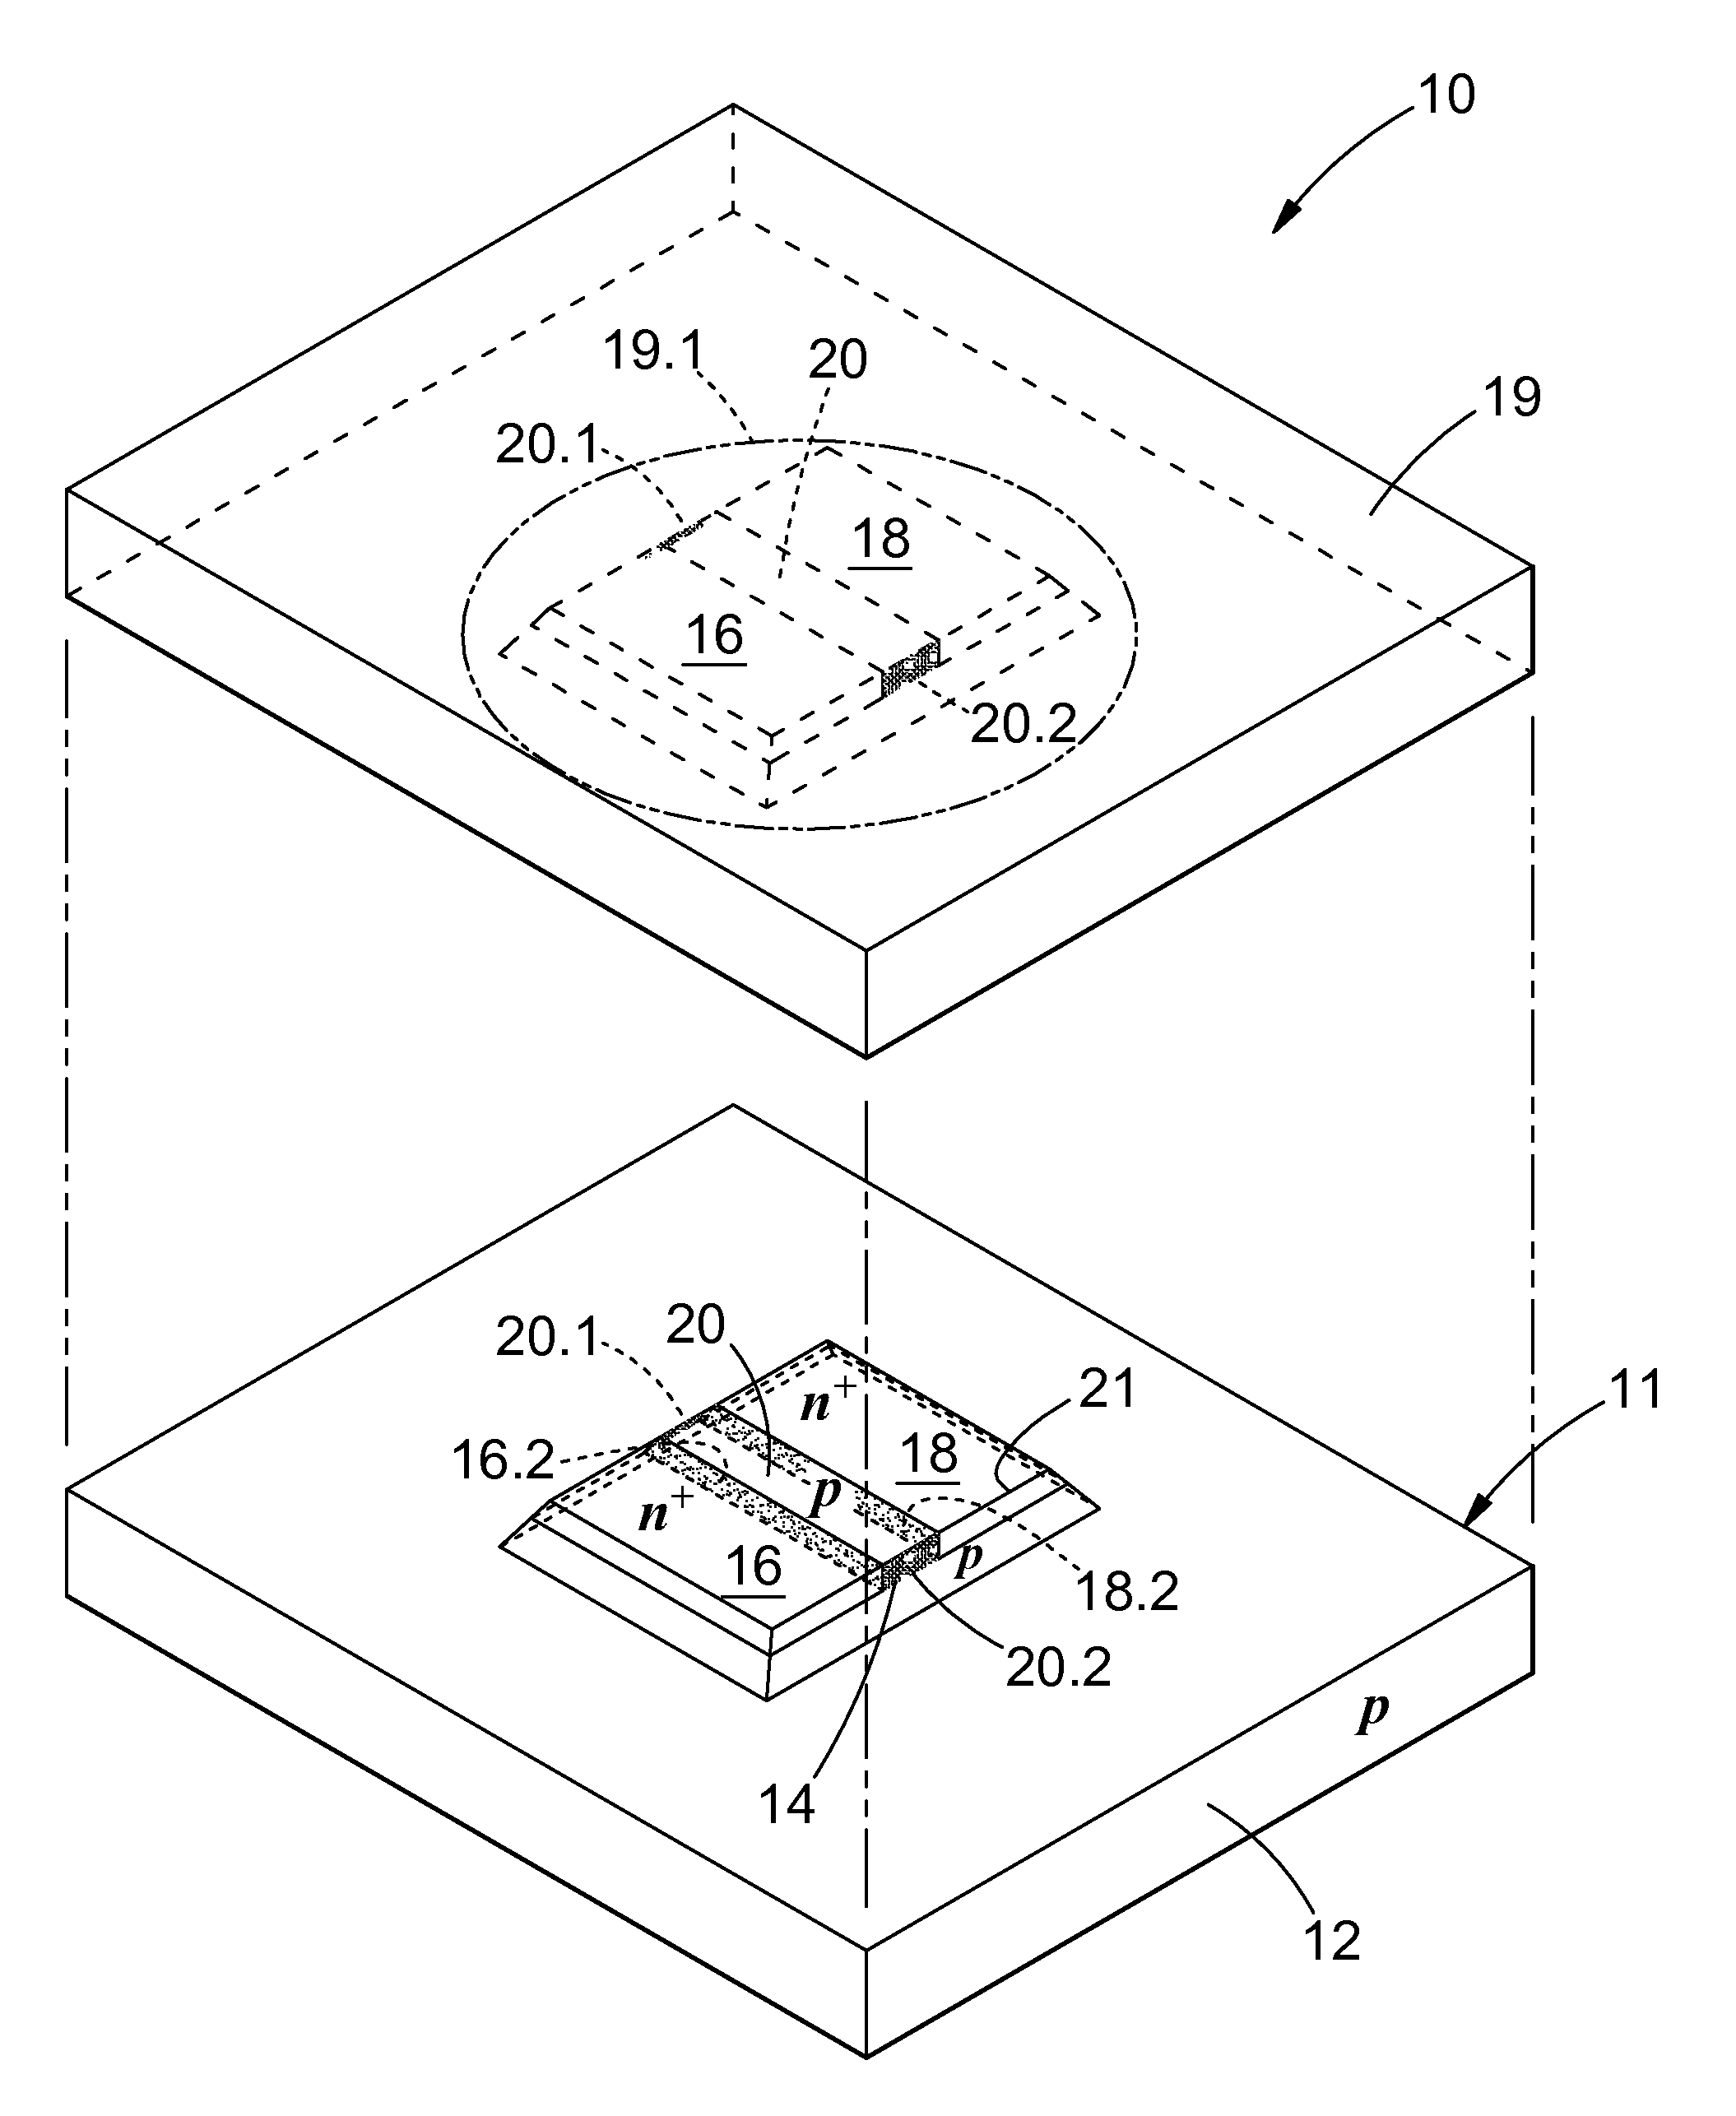 Silicon light emitting device and method of fabricating same